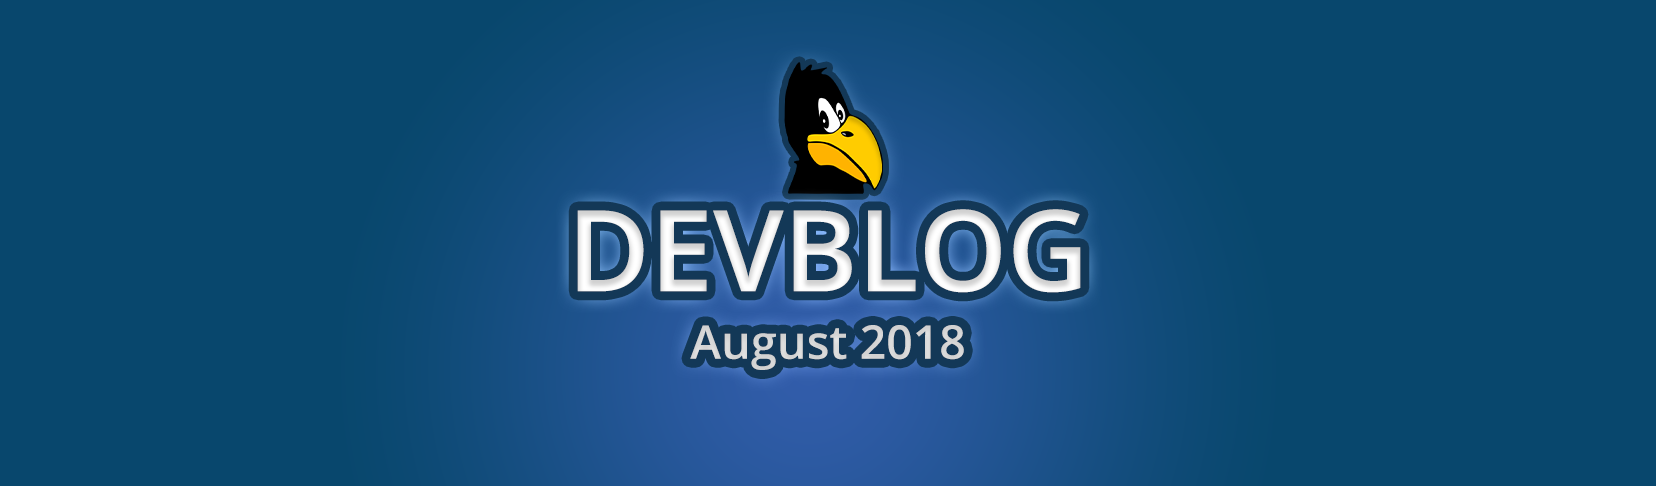 Devblog August 2018